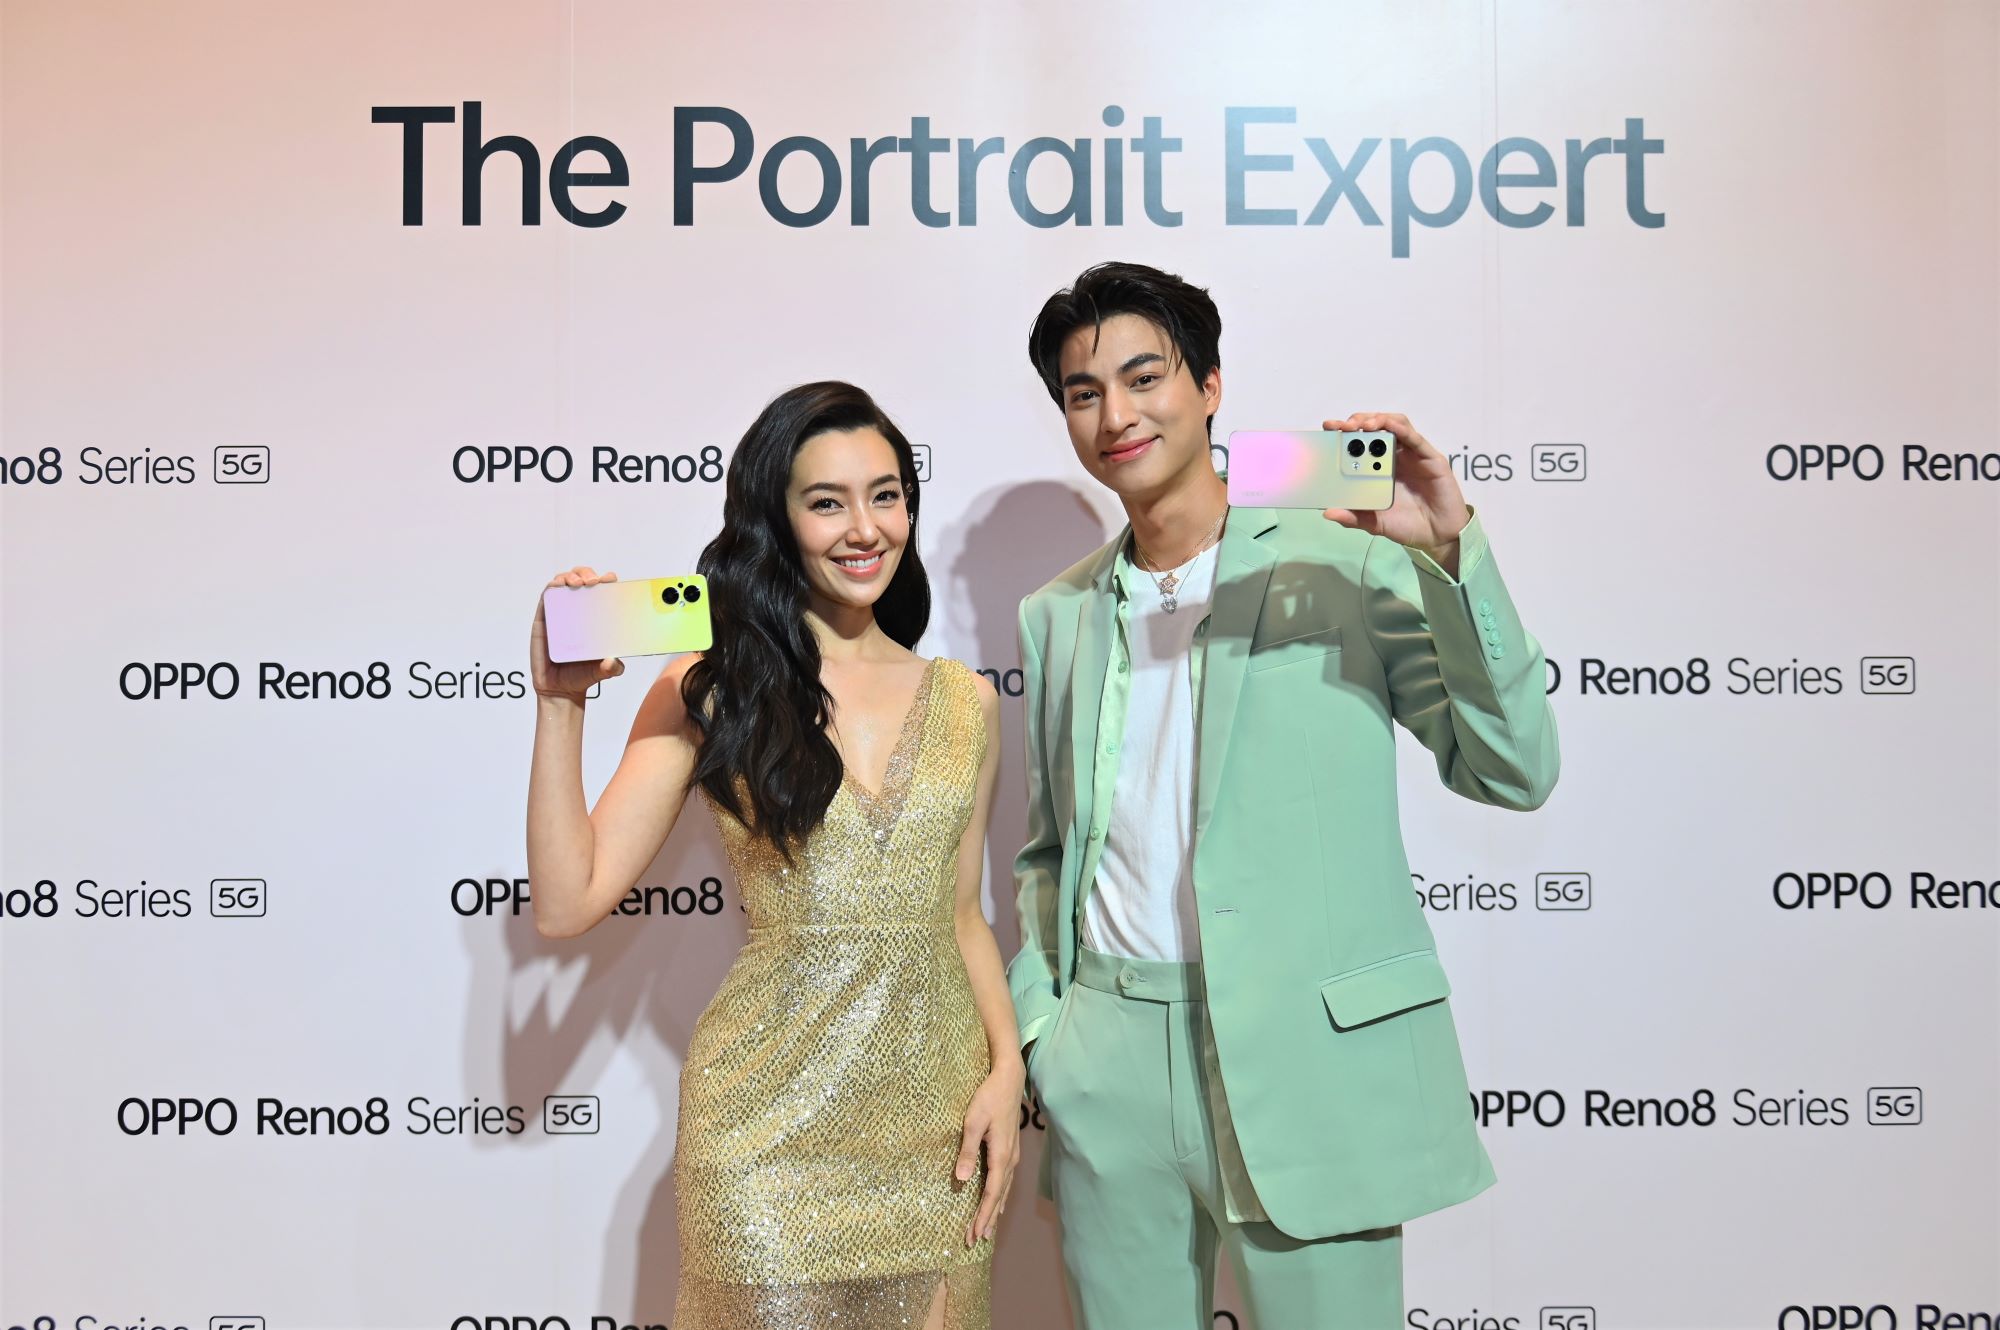 OPPO เปิดตัว OPPO Reno8 Series 5G รุ่นใหม่ กล้อง + ดีไซน์อัปเกรดใหม่ พร้อมเปิดตัว เบลล่า-กลัฟ เป็น The Portrait Expert